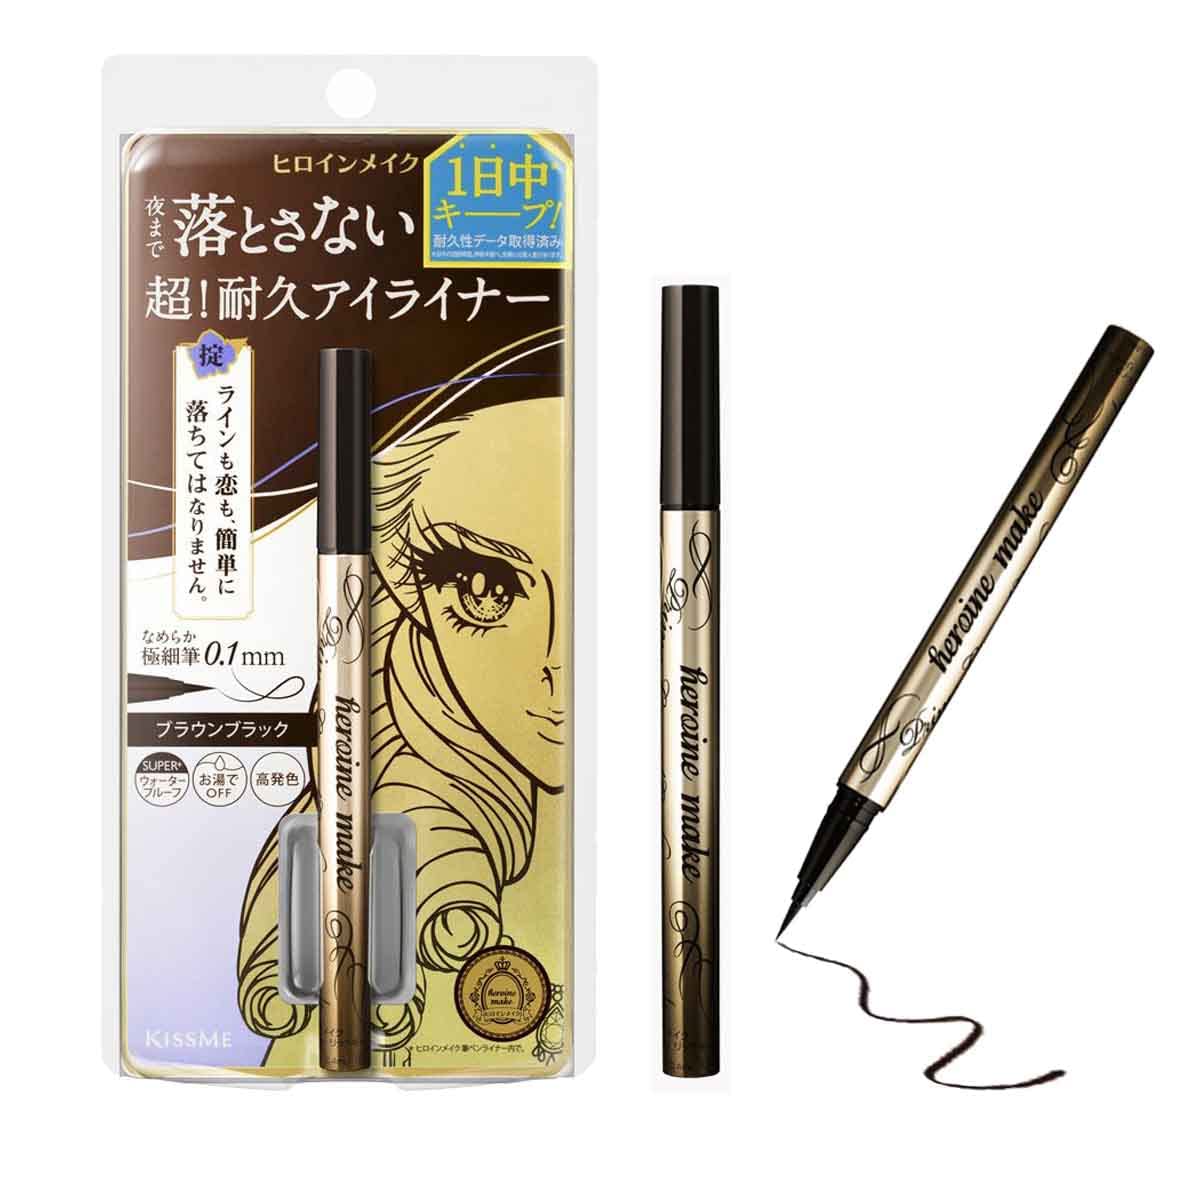 Shiseido Majolica Majorca Honey Pump Gloss Neo Be145 Fallen Angel II 6.5g - Japanese Lip Gloss